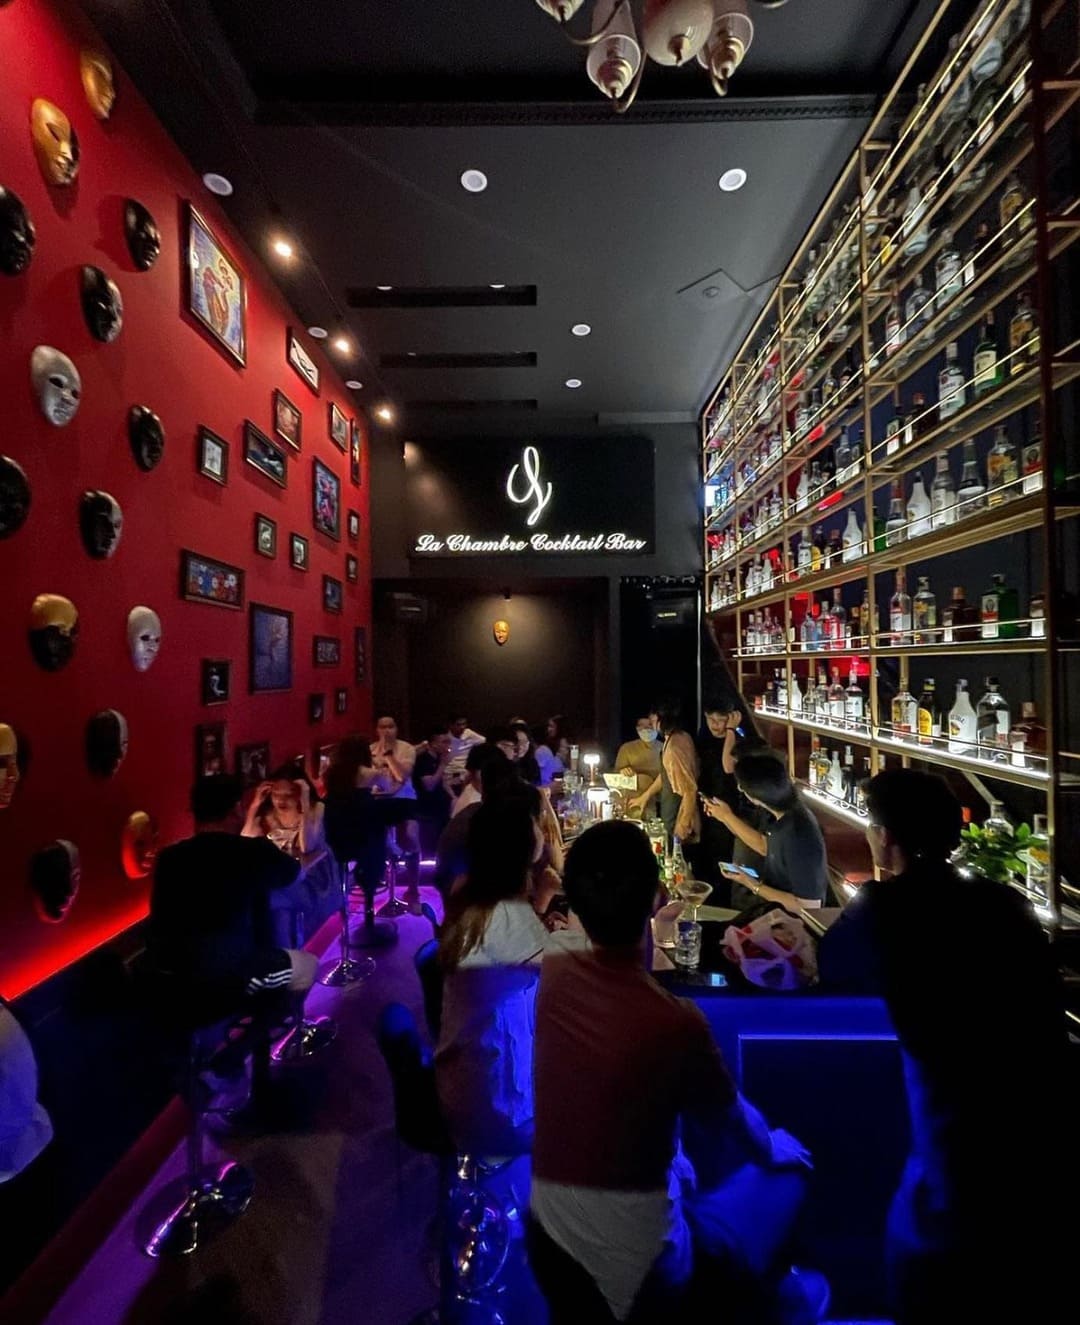 La Chambre Cocktail Bar